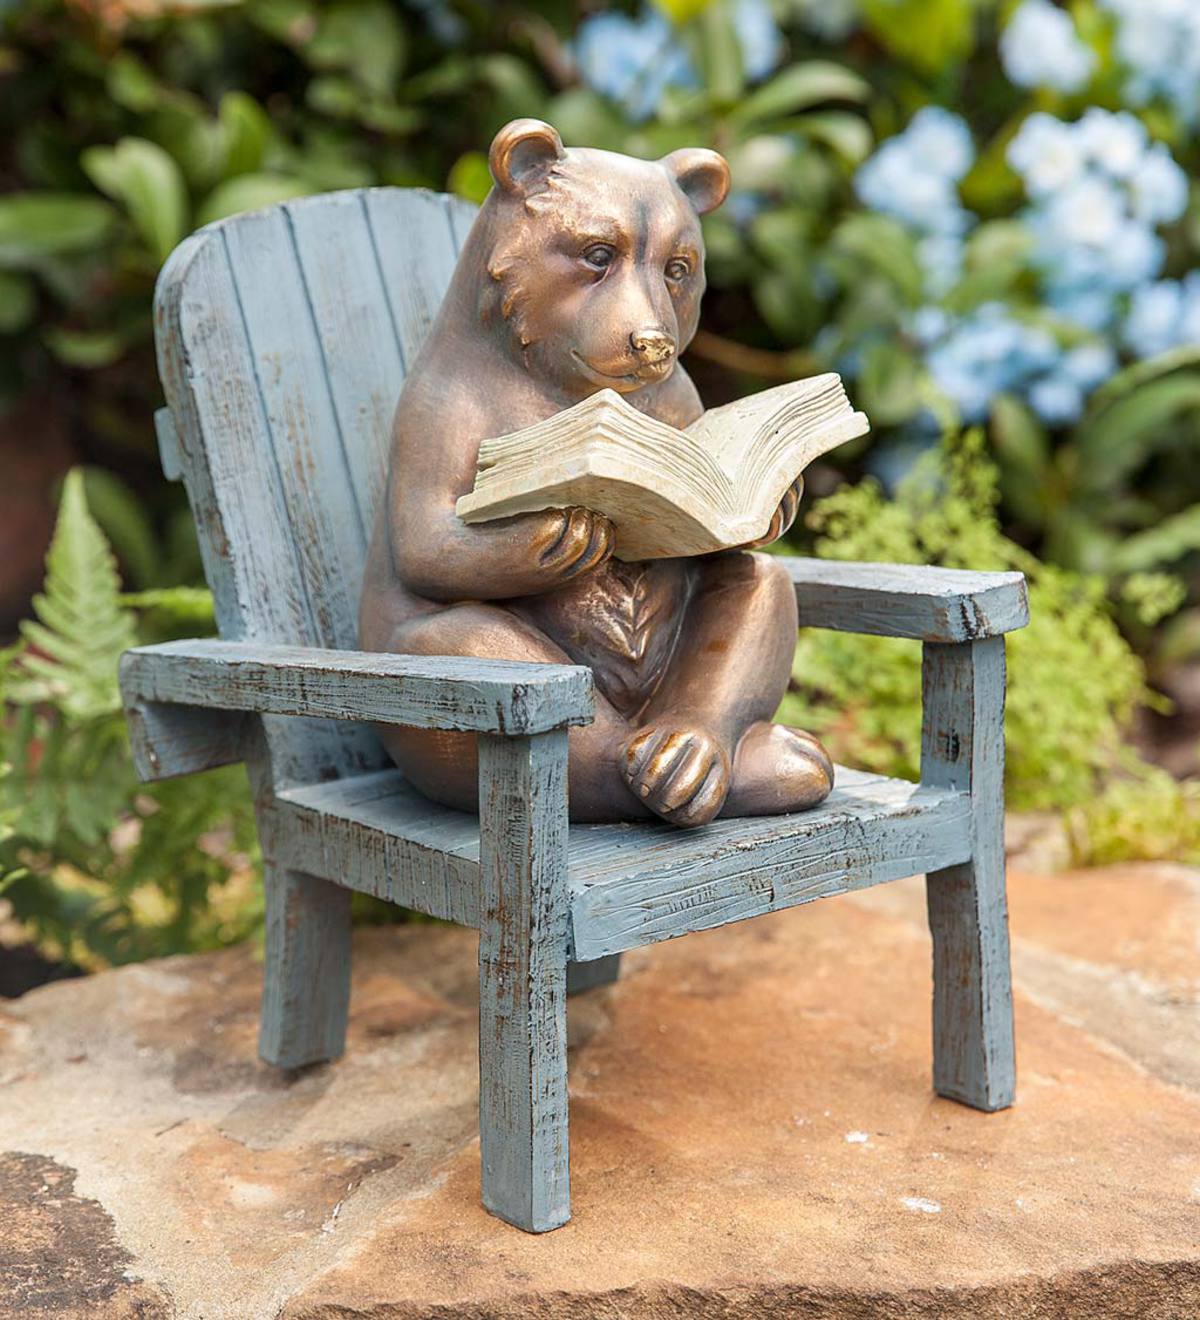 SPI Home Hipster Bears on Bench Garden Sculpture